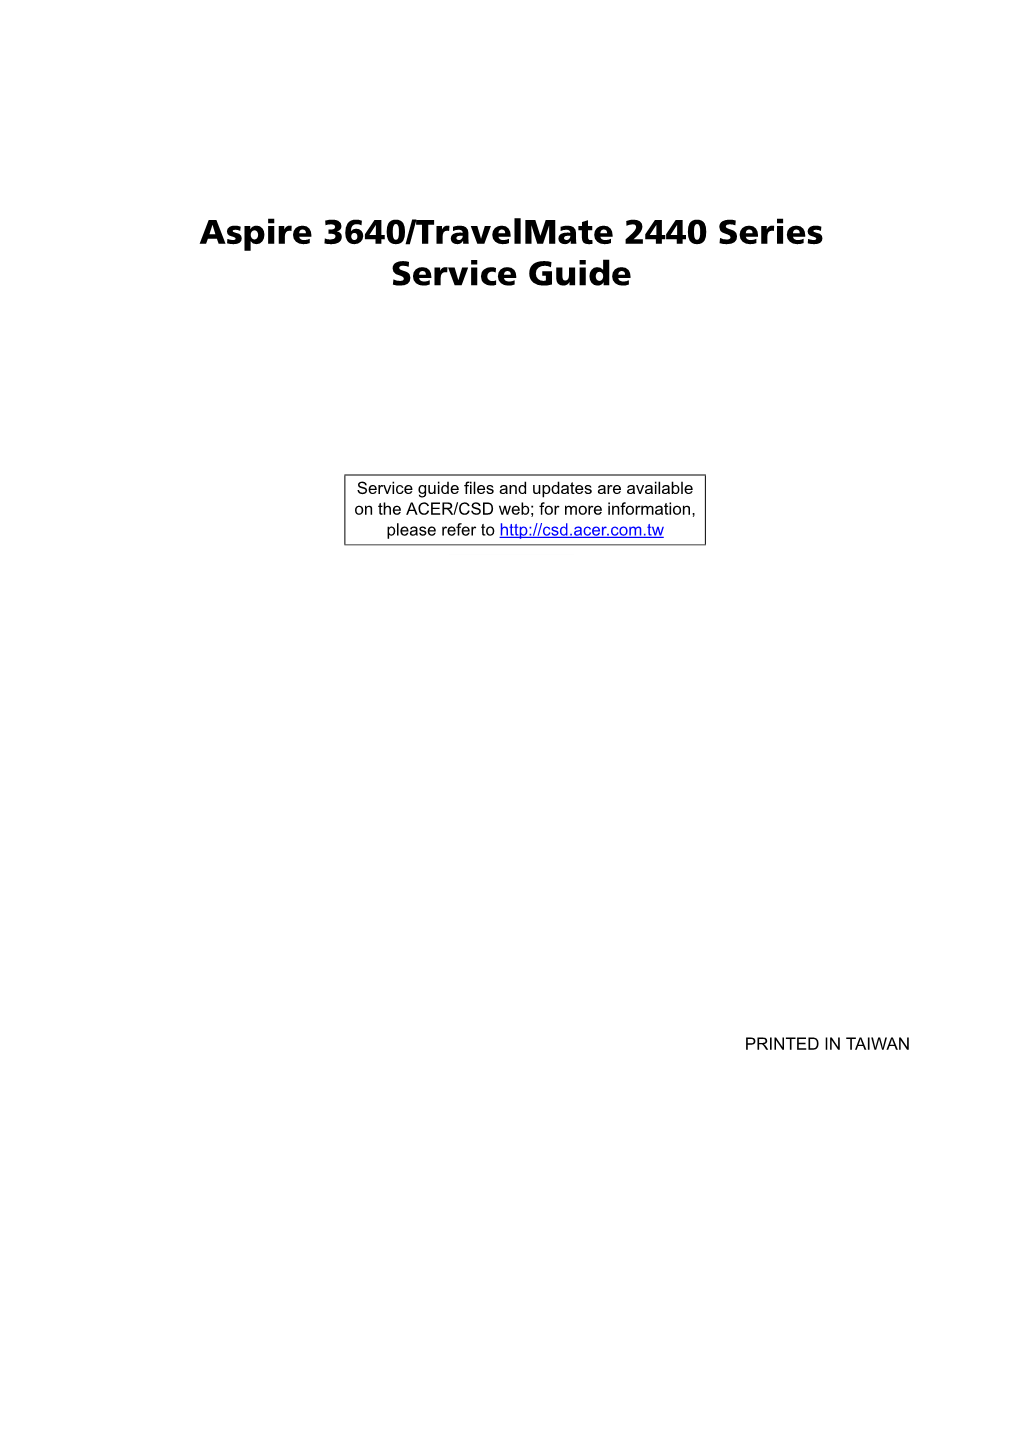 Aspire 3640/Travelmate 2440 Series Service Guide